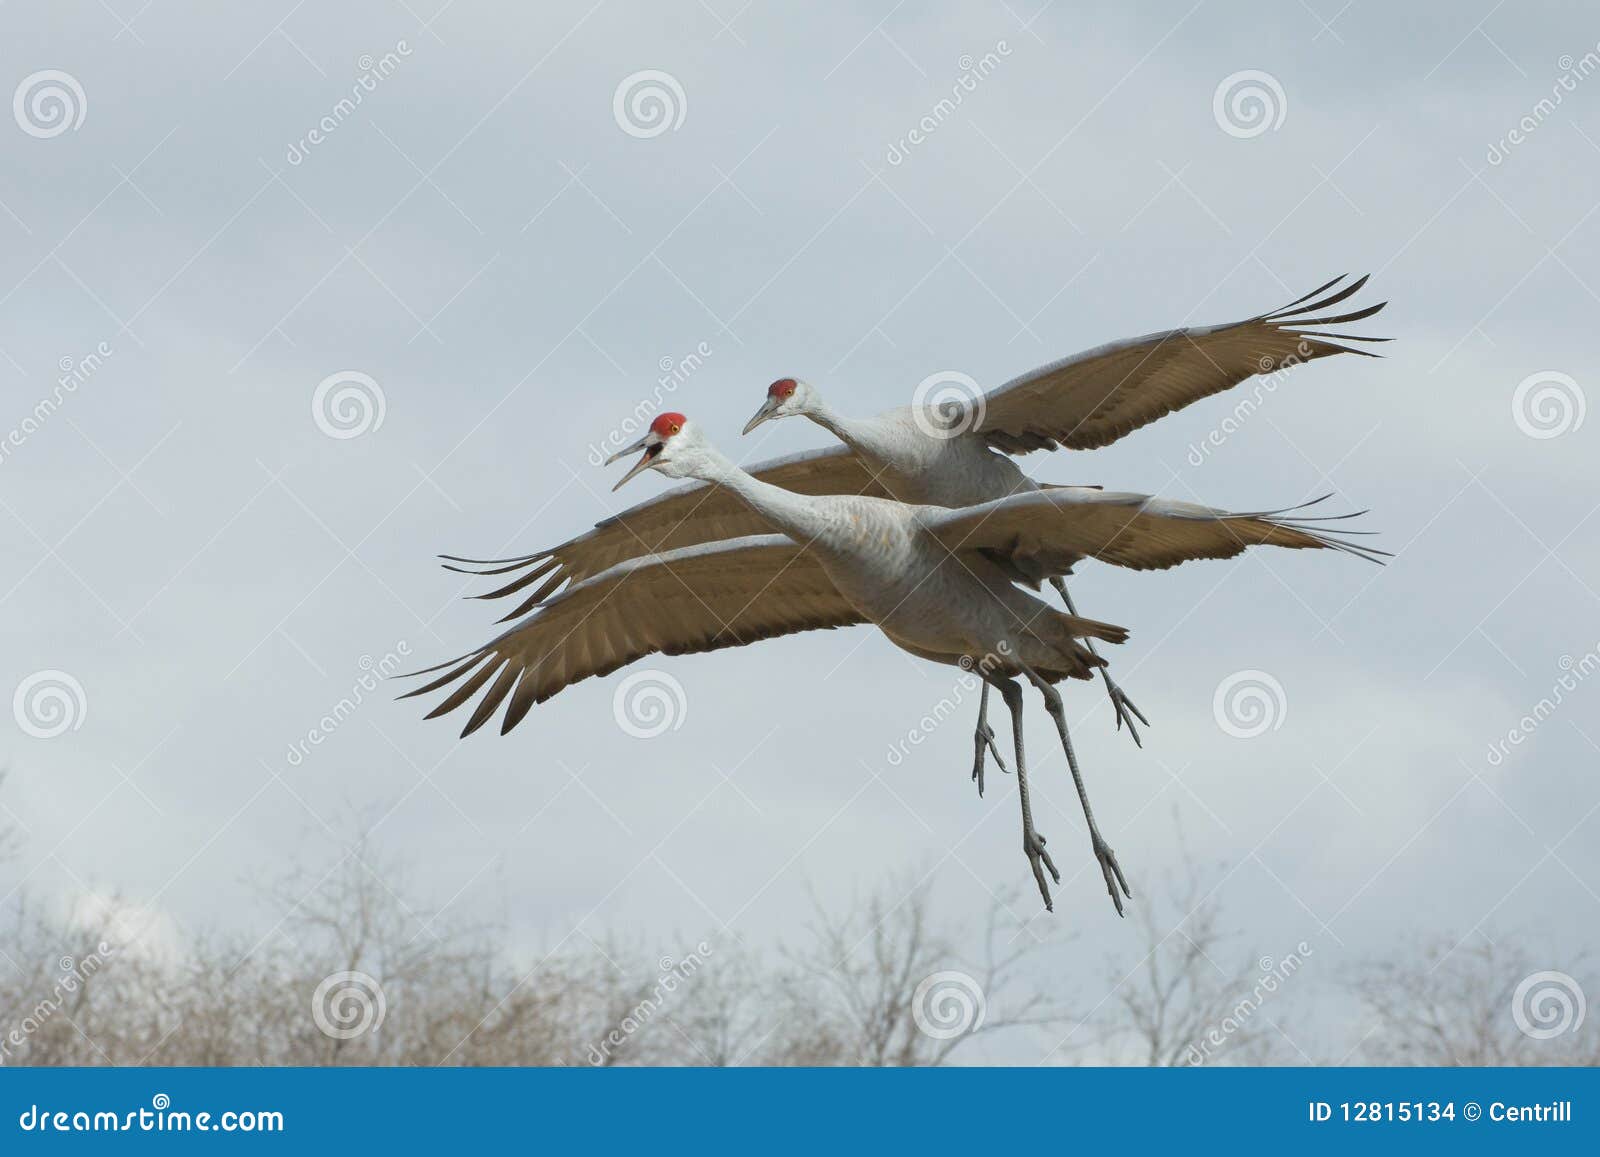 two sandhill cranes in flight